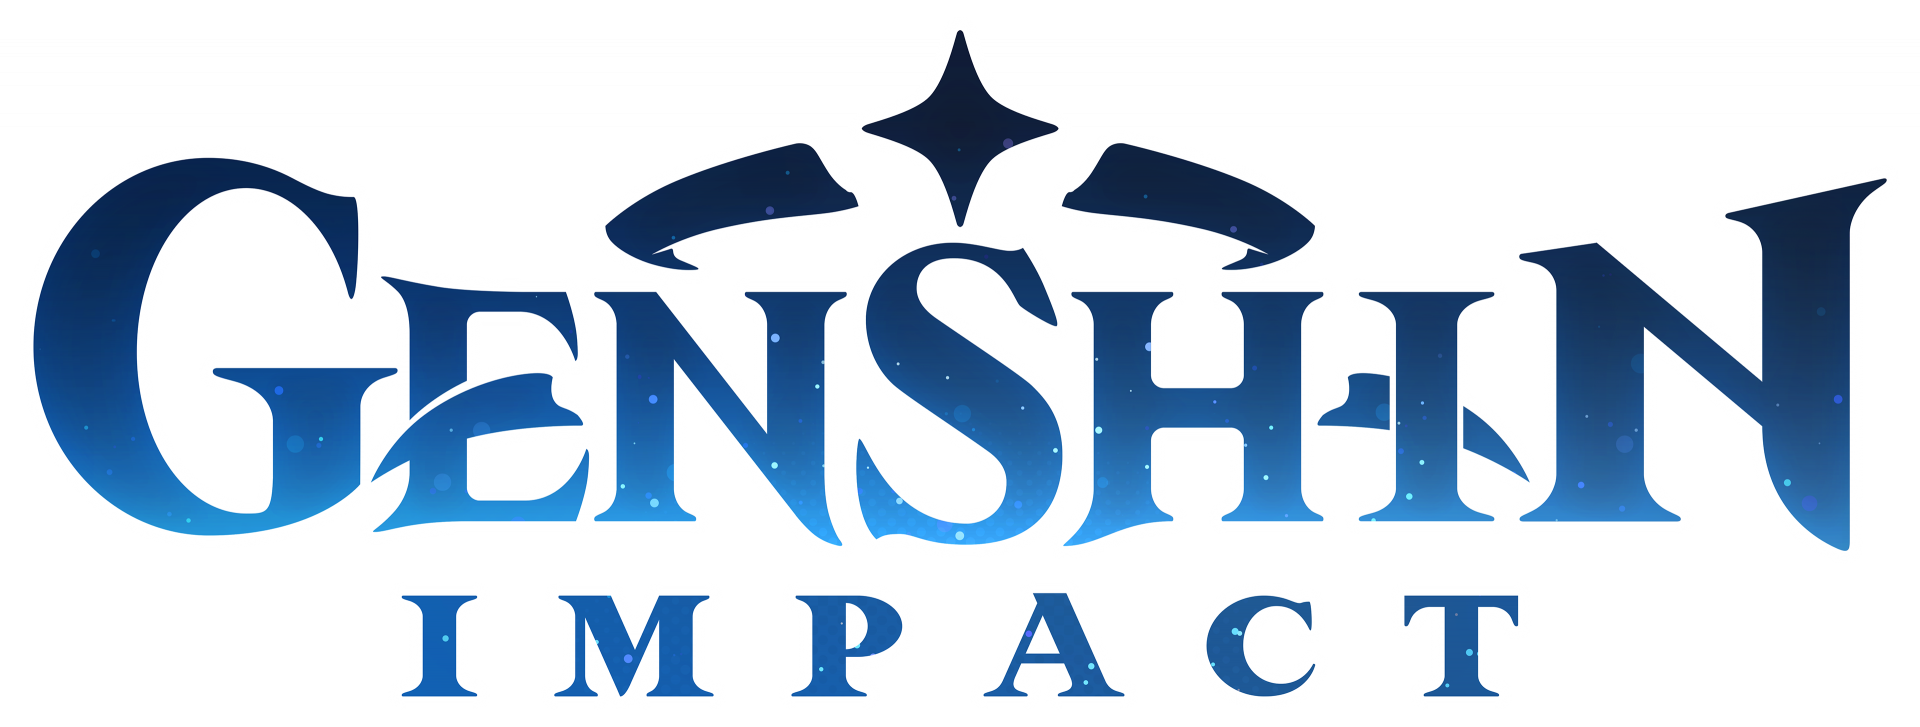 Logo du jeu mobile Genshin Impact